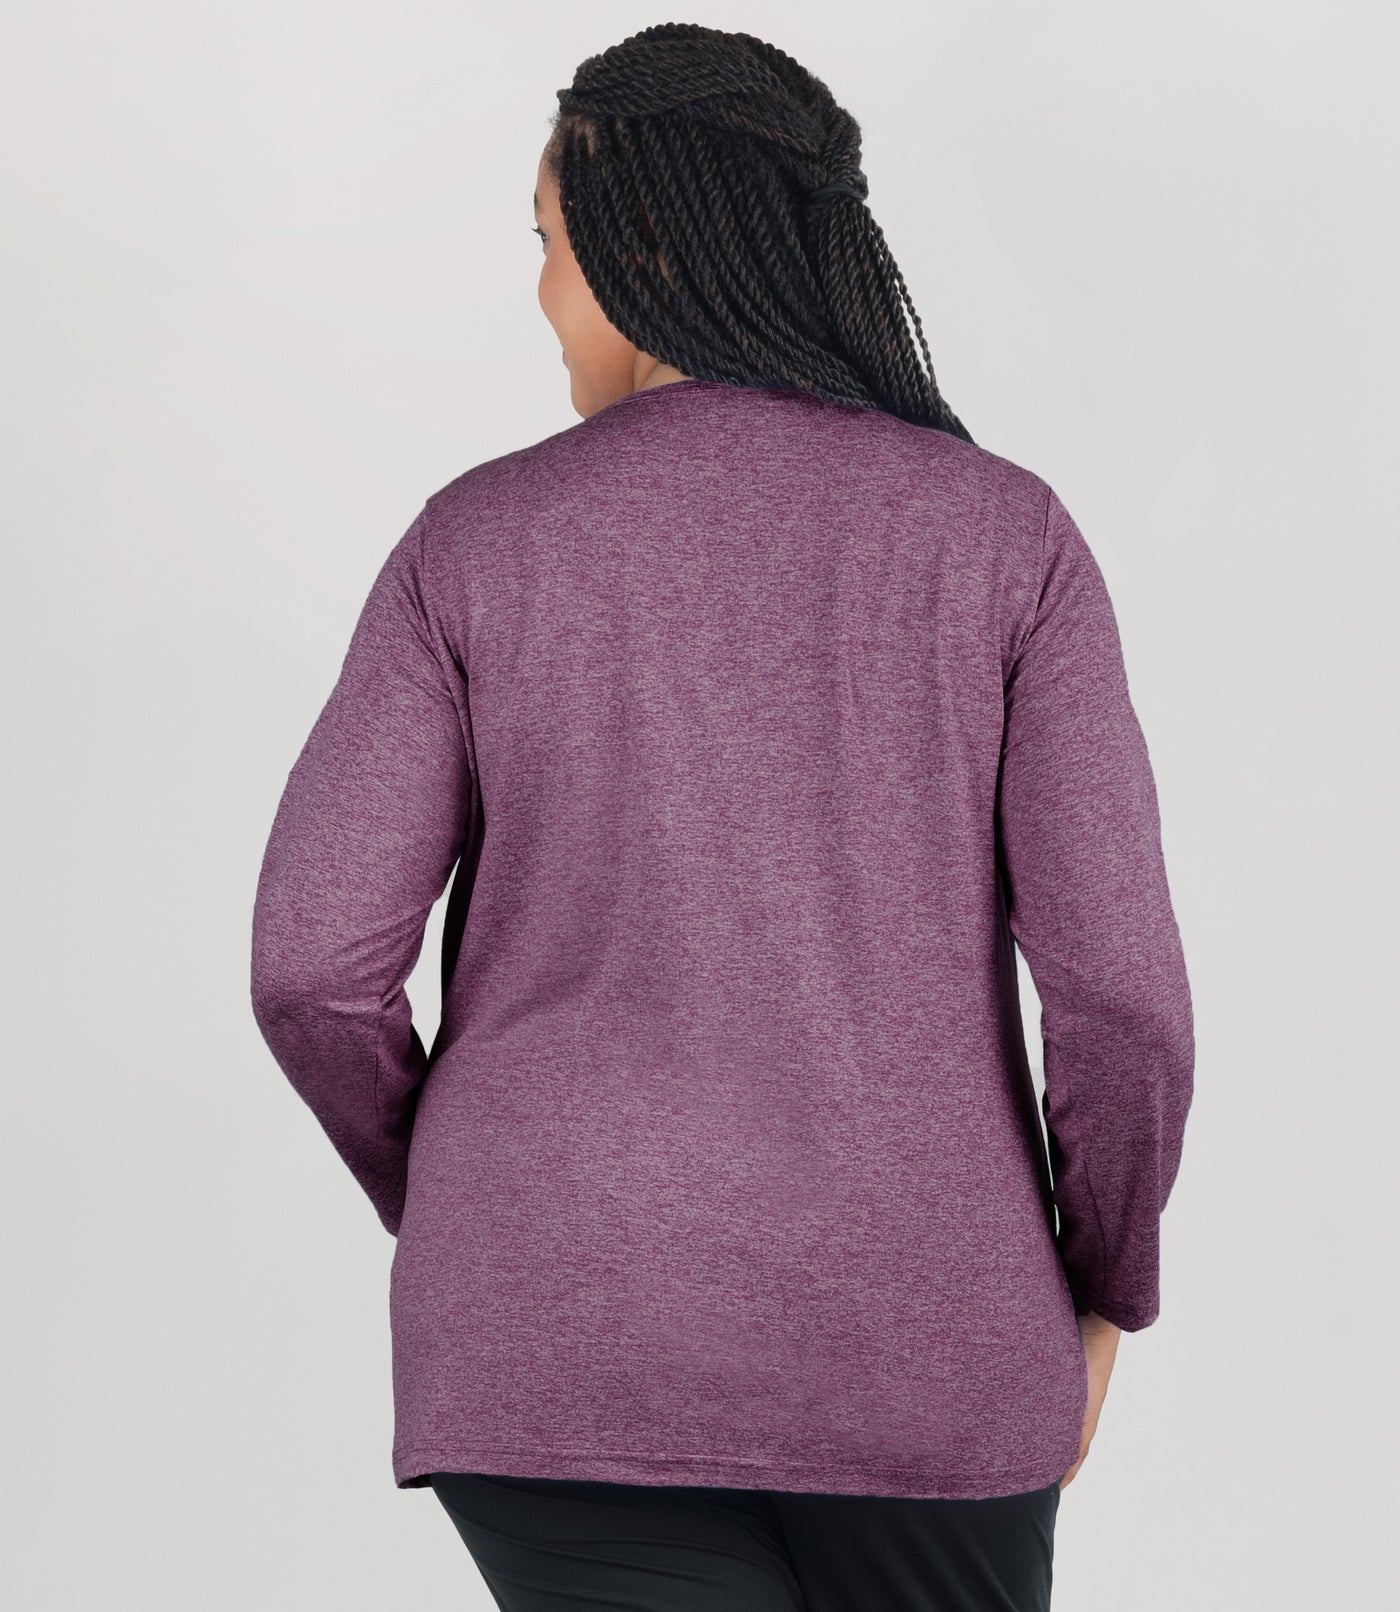 Model, facing back, wearing JunoActive's Softwick Long Sleeve Crew Neck Top in color heather merlot.